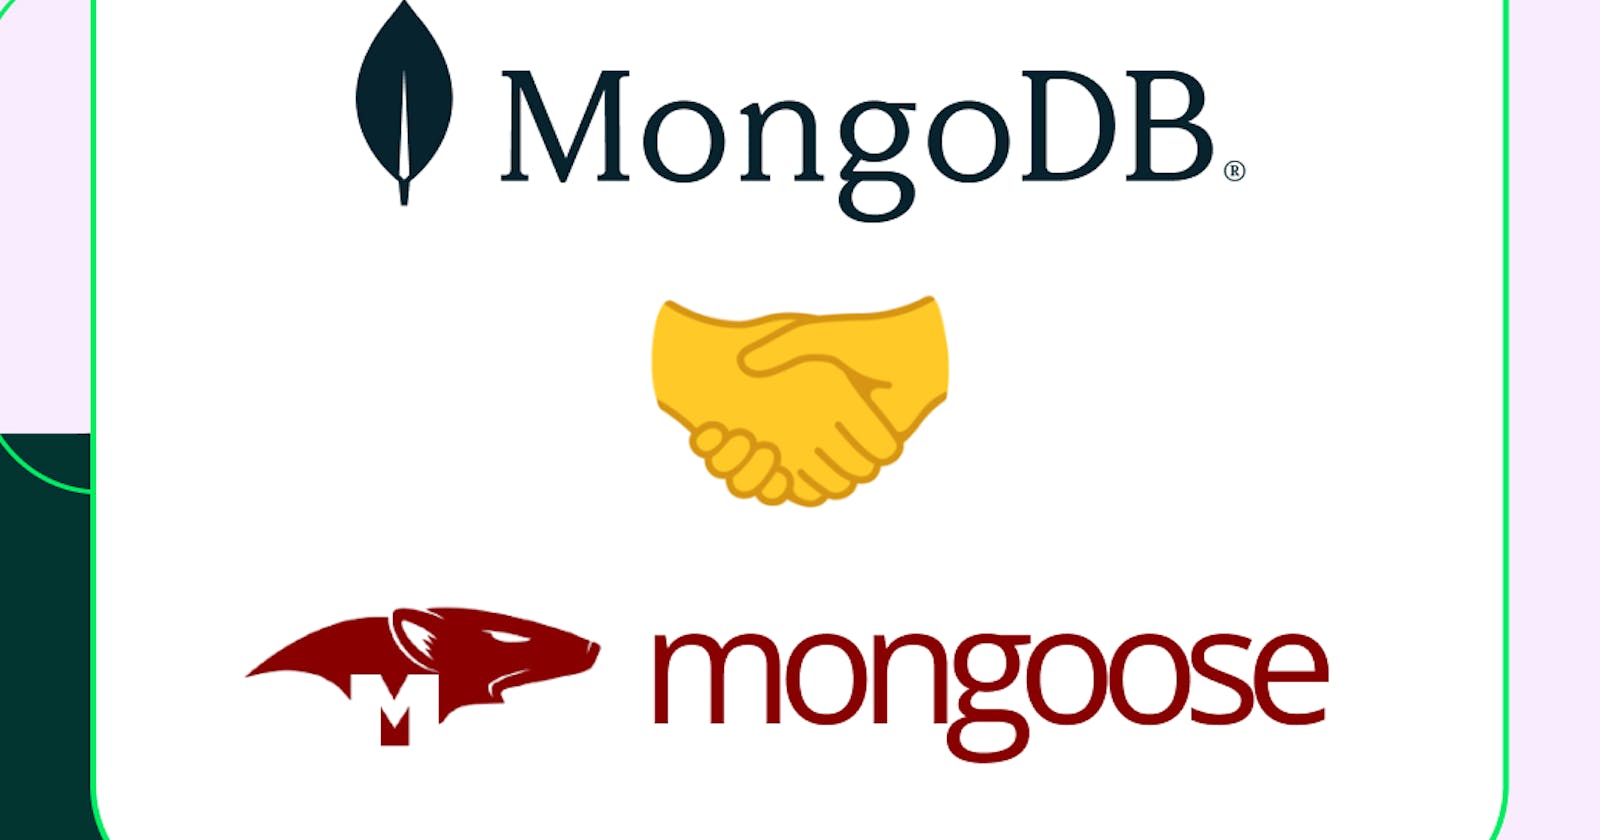 Handling MongoDB operations using Mongoose